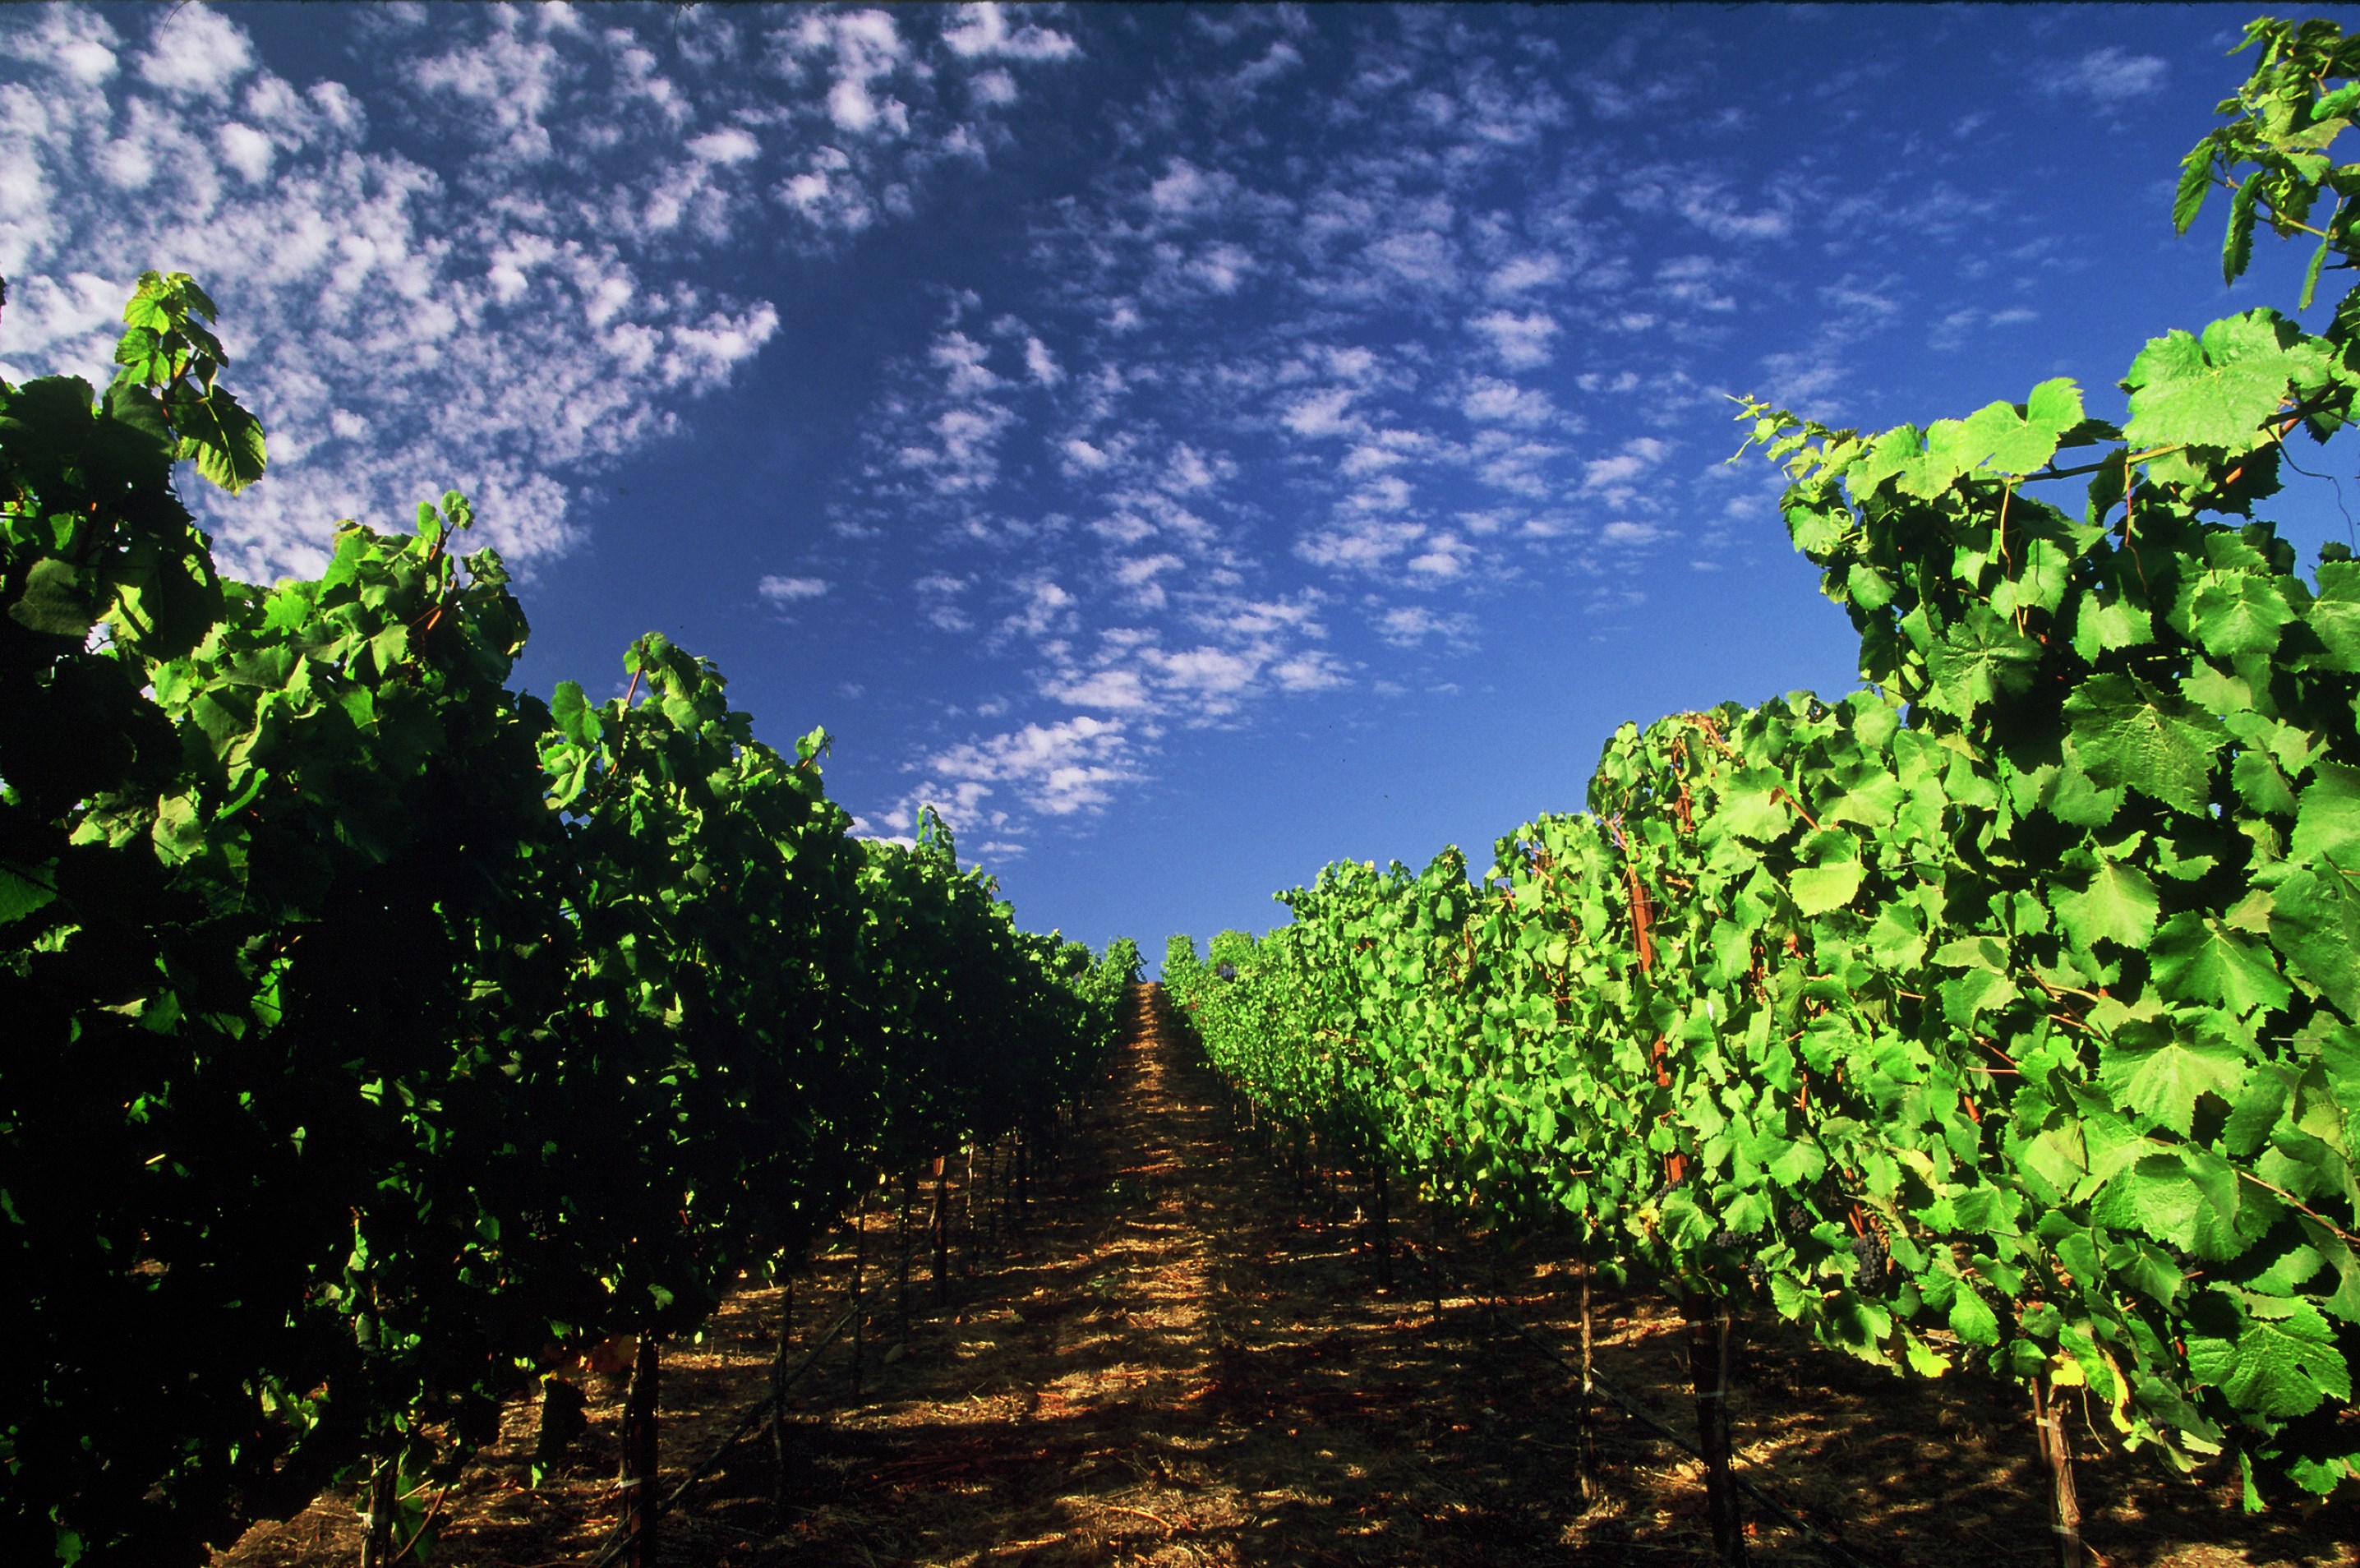 TSG Consumer Partners Acquires Duckhorn Wine Company — TSG Consumer